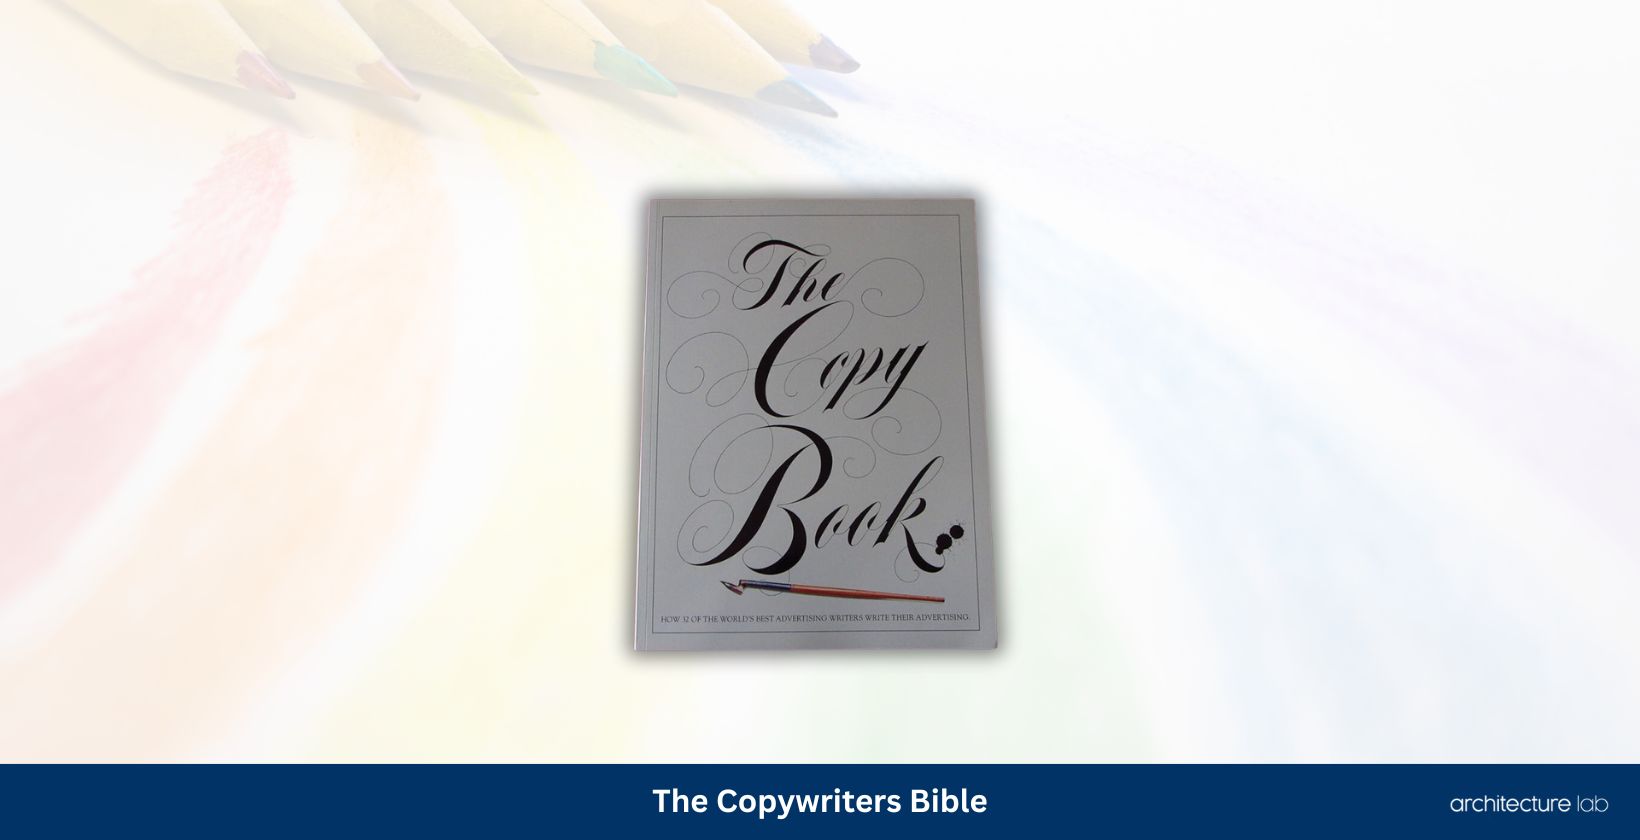 The copywriters bible